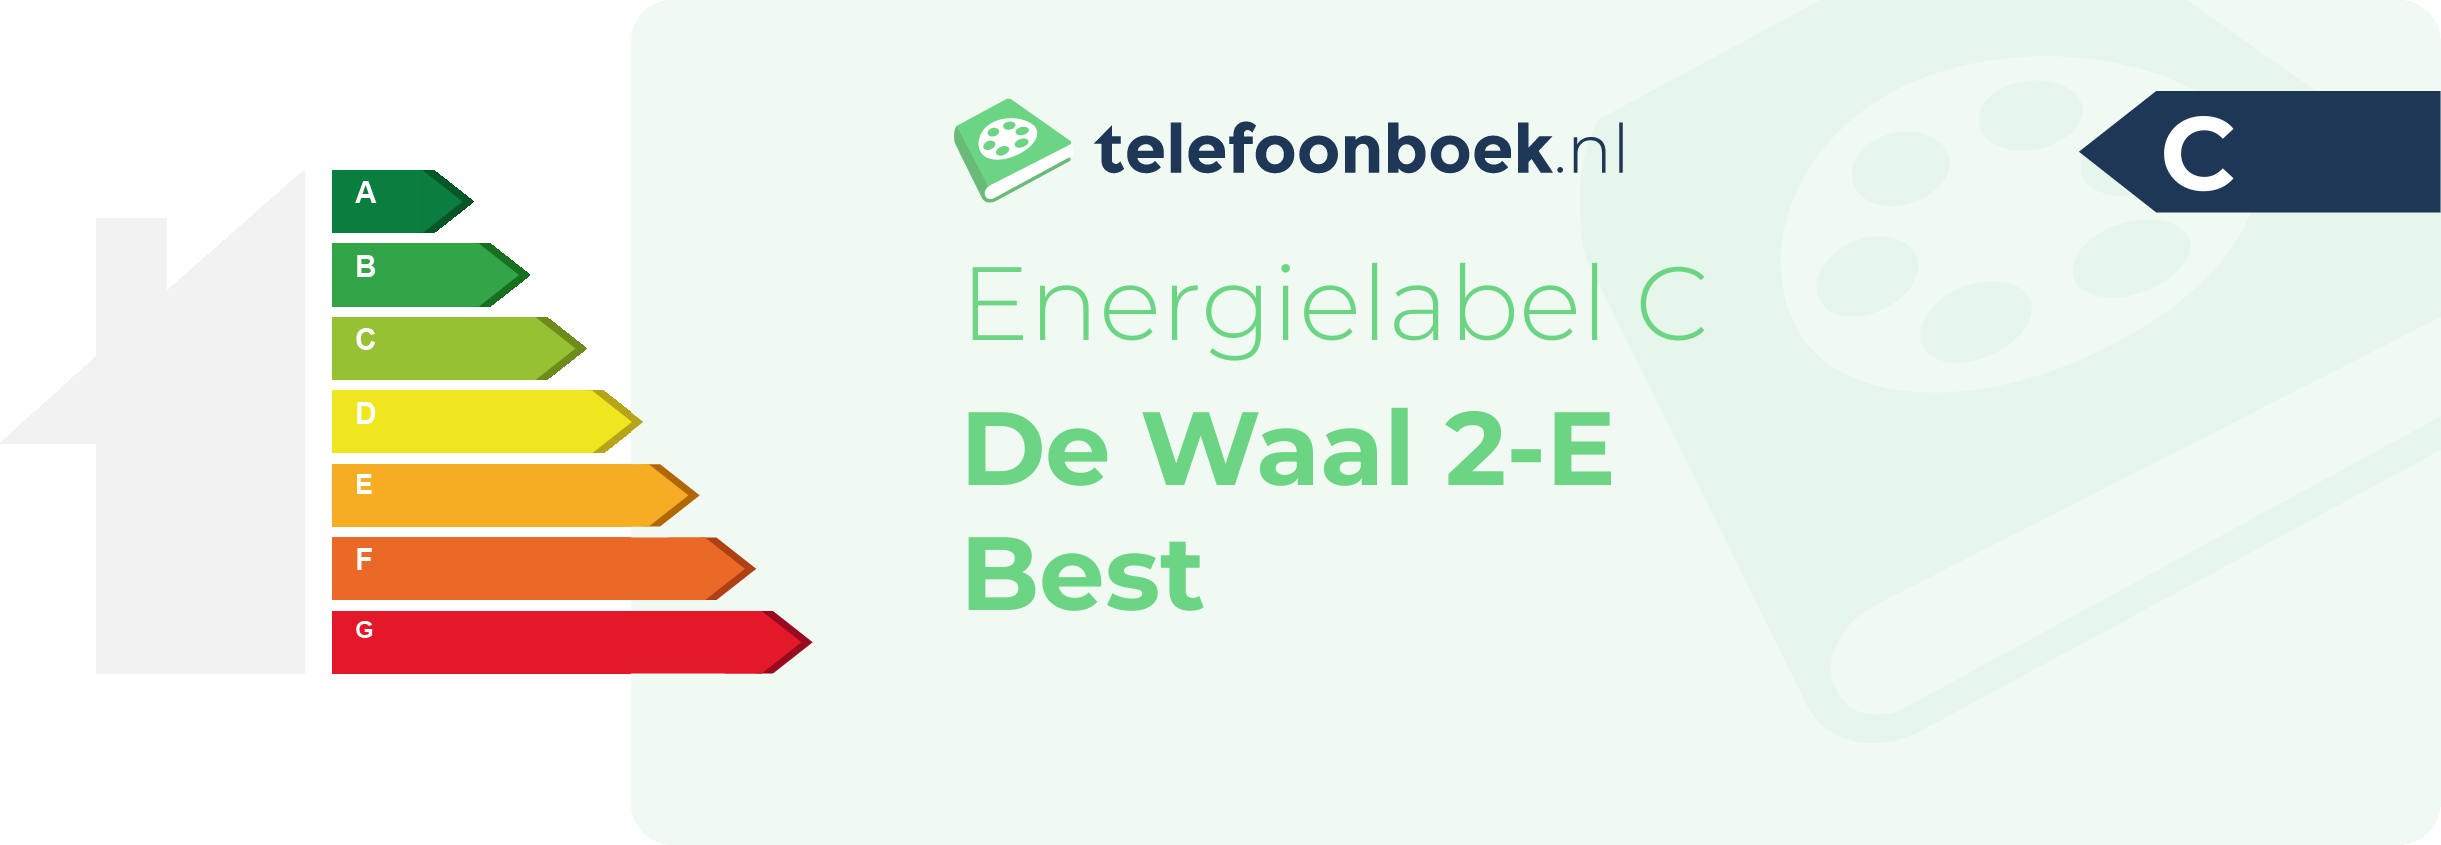 Energielabel De Waal 2-E Best